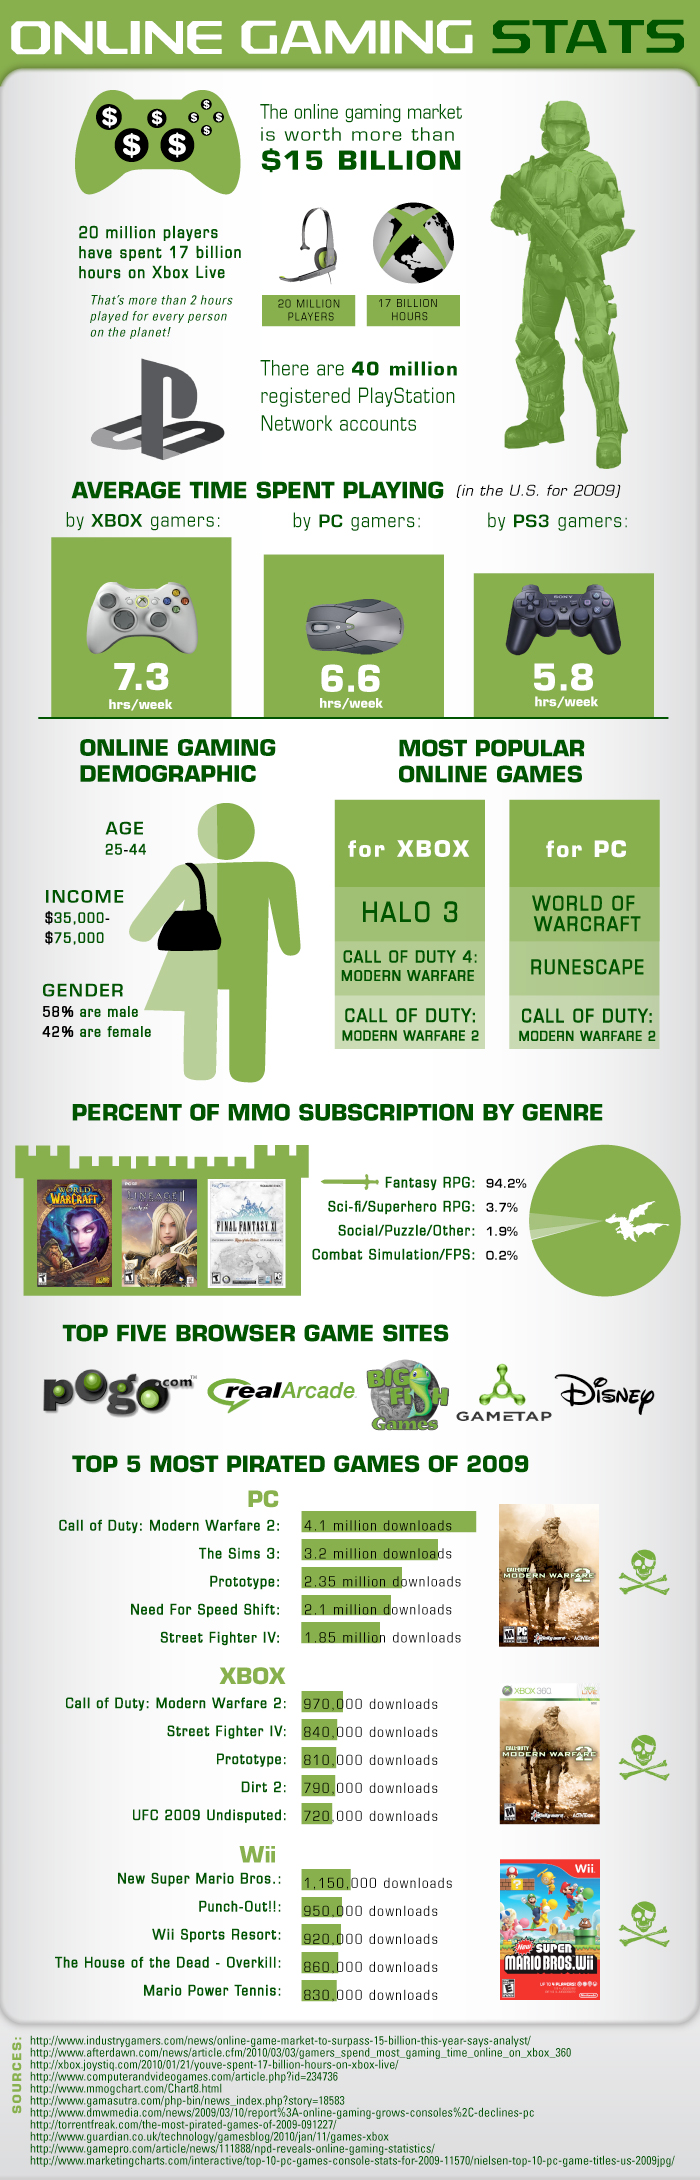 http://www.onlinemba.com/blog/online-gaming-statistics/